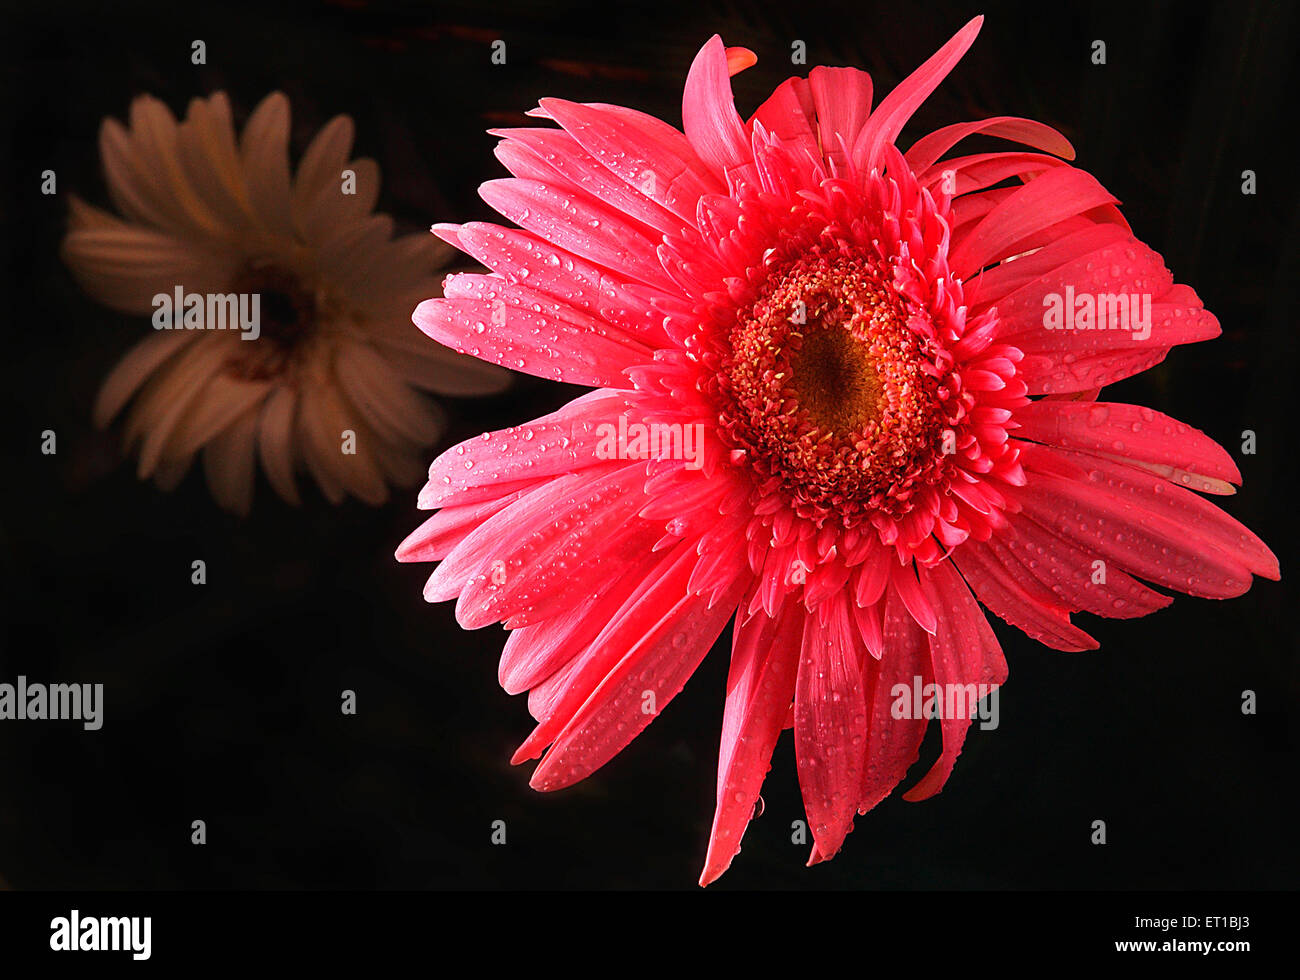 Pink dahlia flower Stock Photo